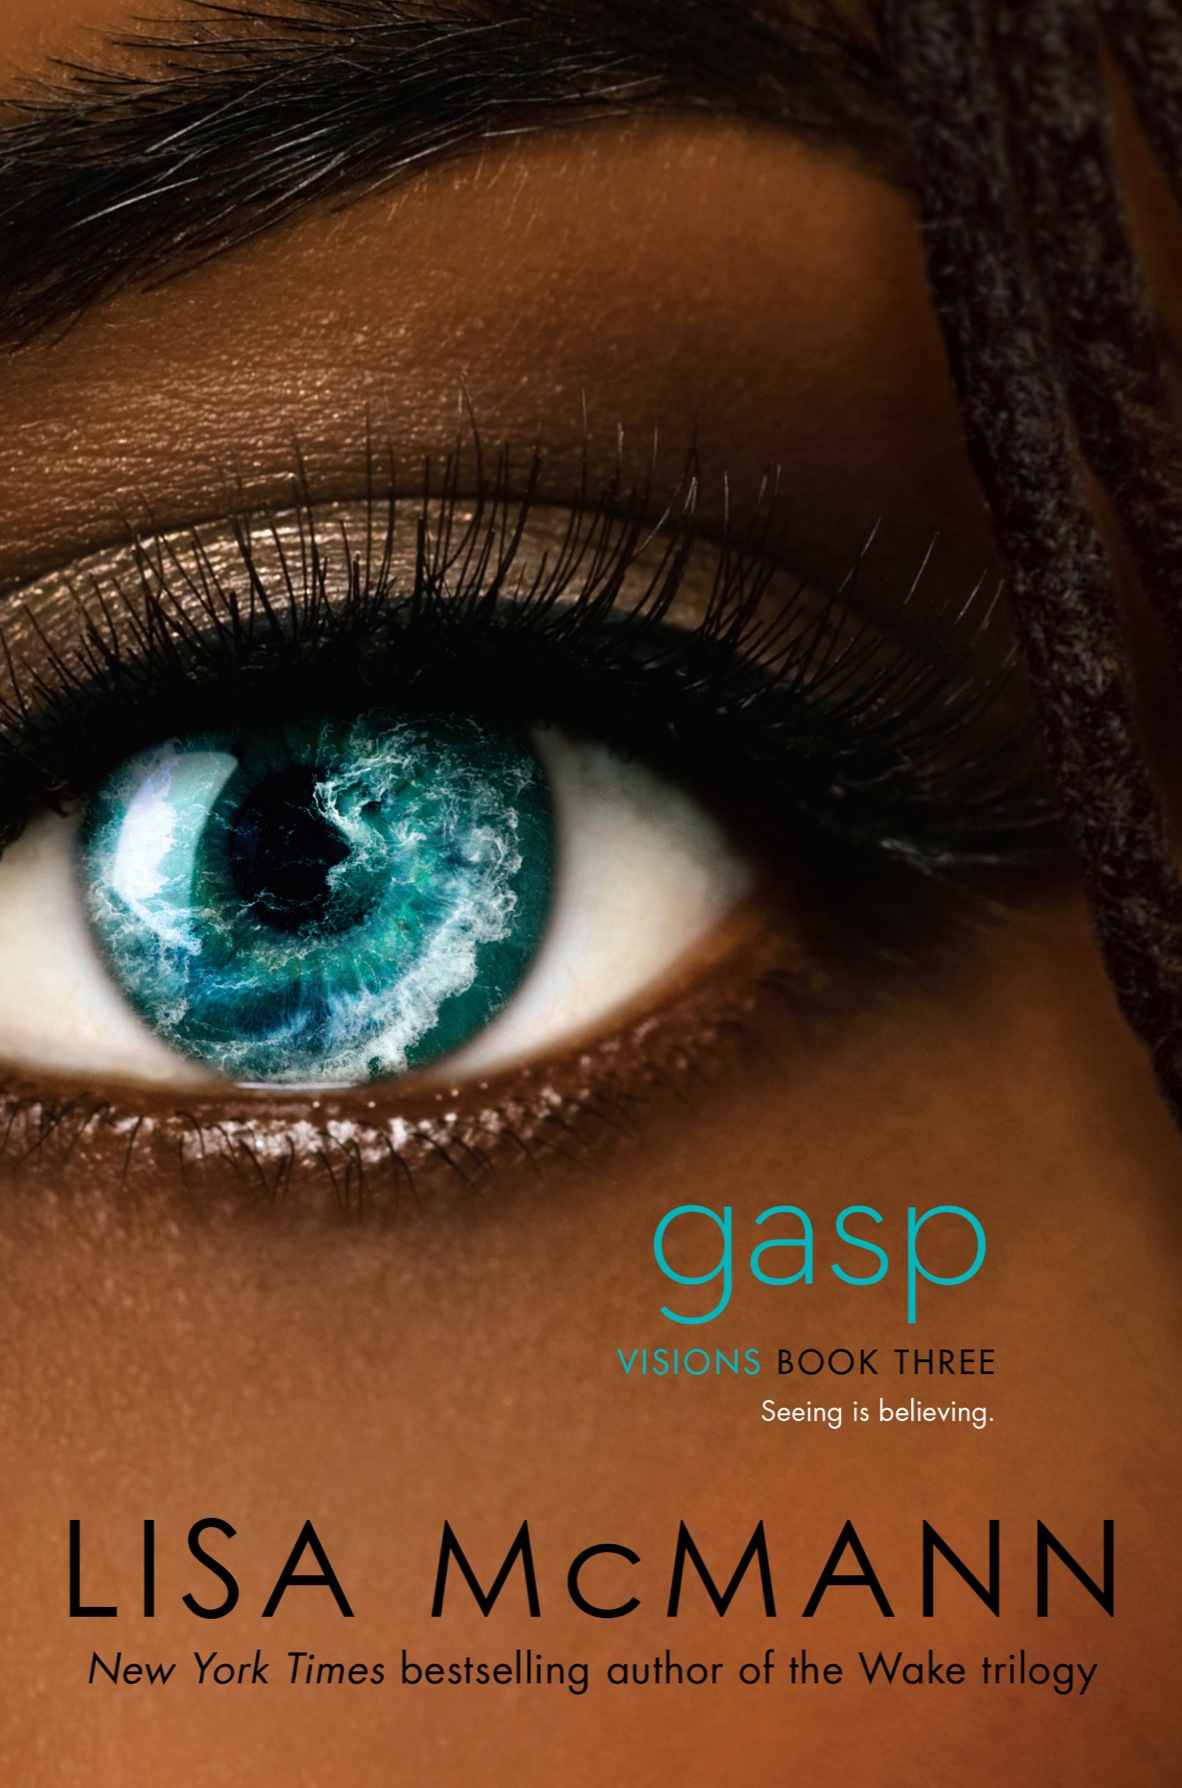 Gasp (Visions) by Lisa McMann